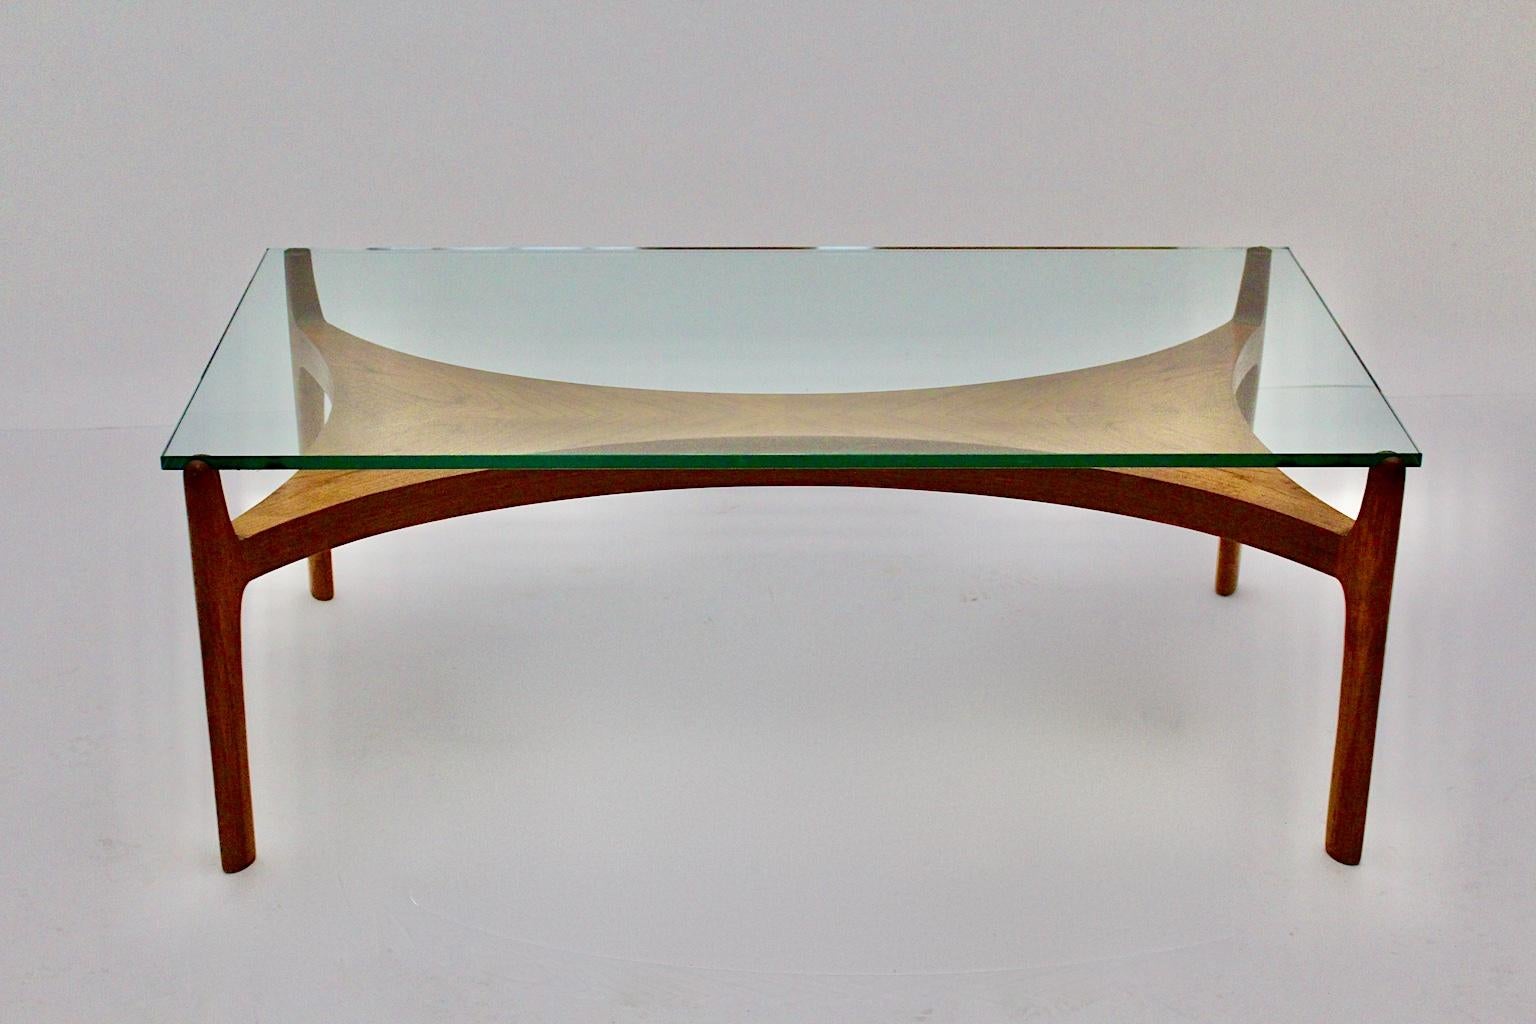 Danish Scandinavian Modern Vintage Teak Glass Coffee Table by Sven Ellekaer, 1960s For Sale